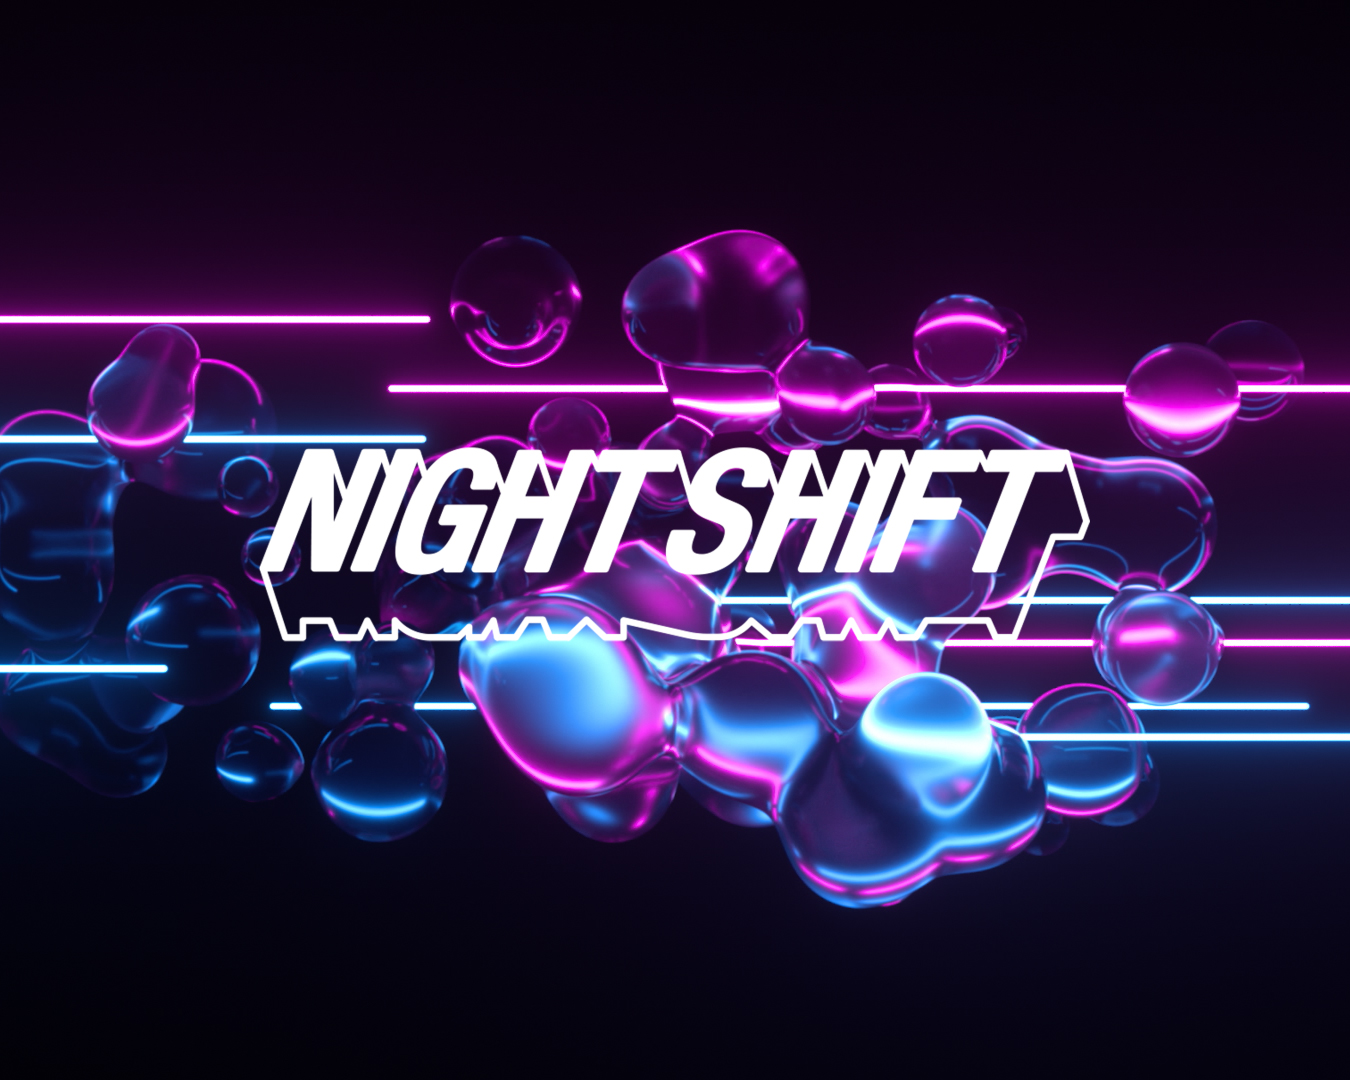 Night Shift Event